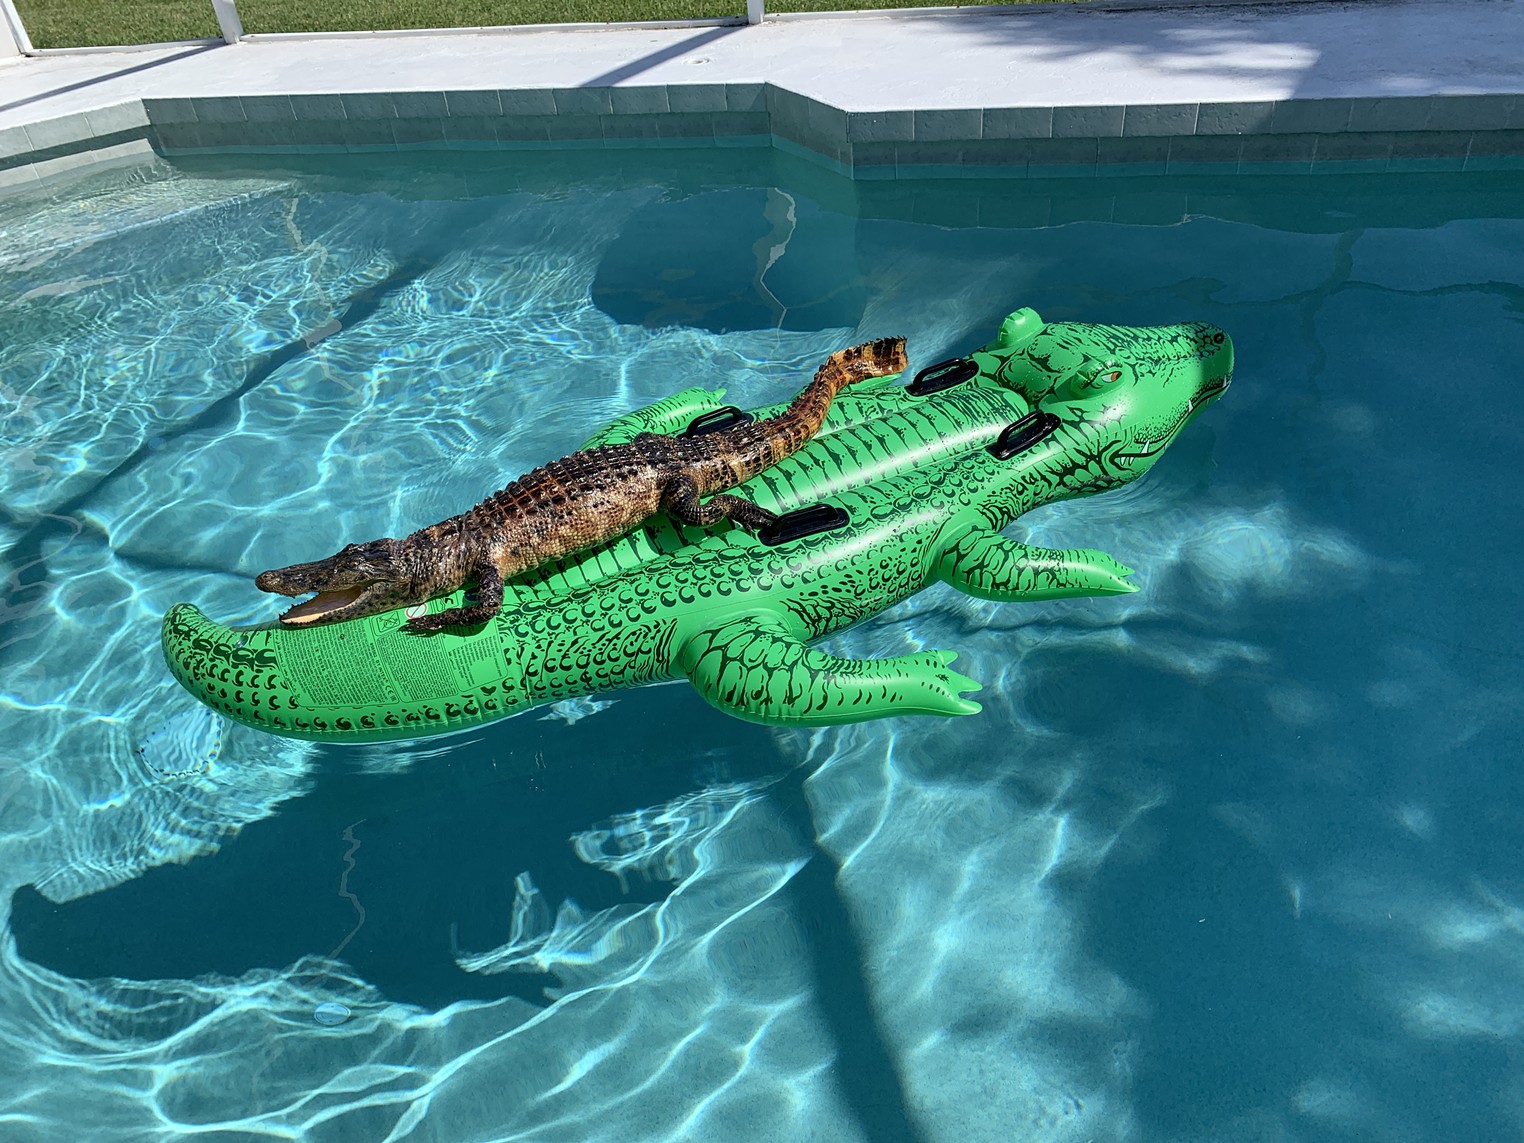 Alligator Spotted on Alligator Pool Float at Miami Airbnb